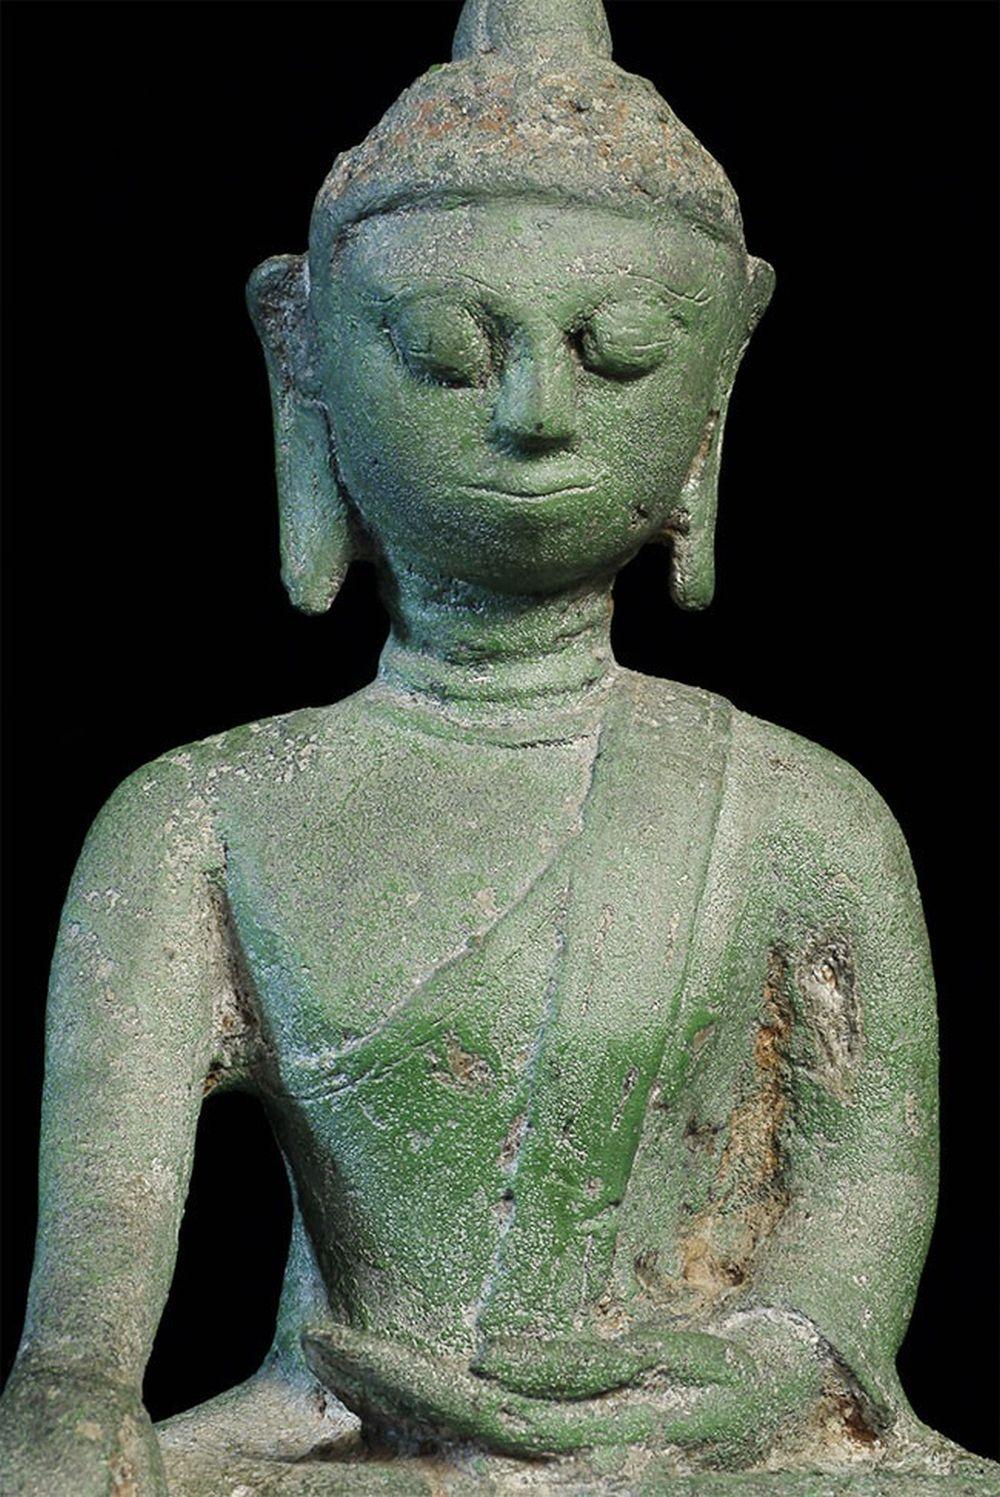  11. Jh. Bronze Buddha- Pyu/Pagan Burma Seltene, mächtige Antike- TL Test! - 8439 im Angebot 9